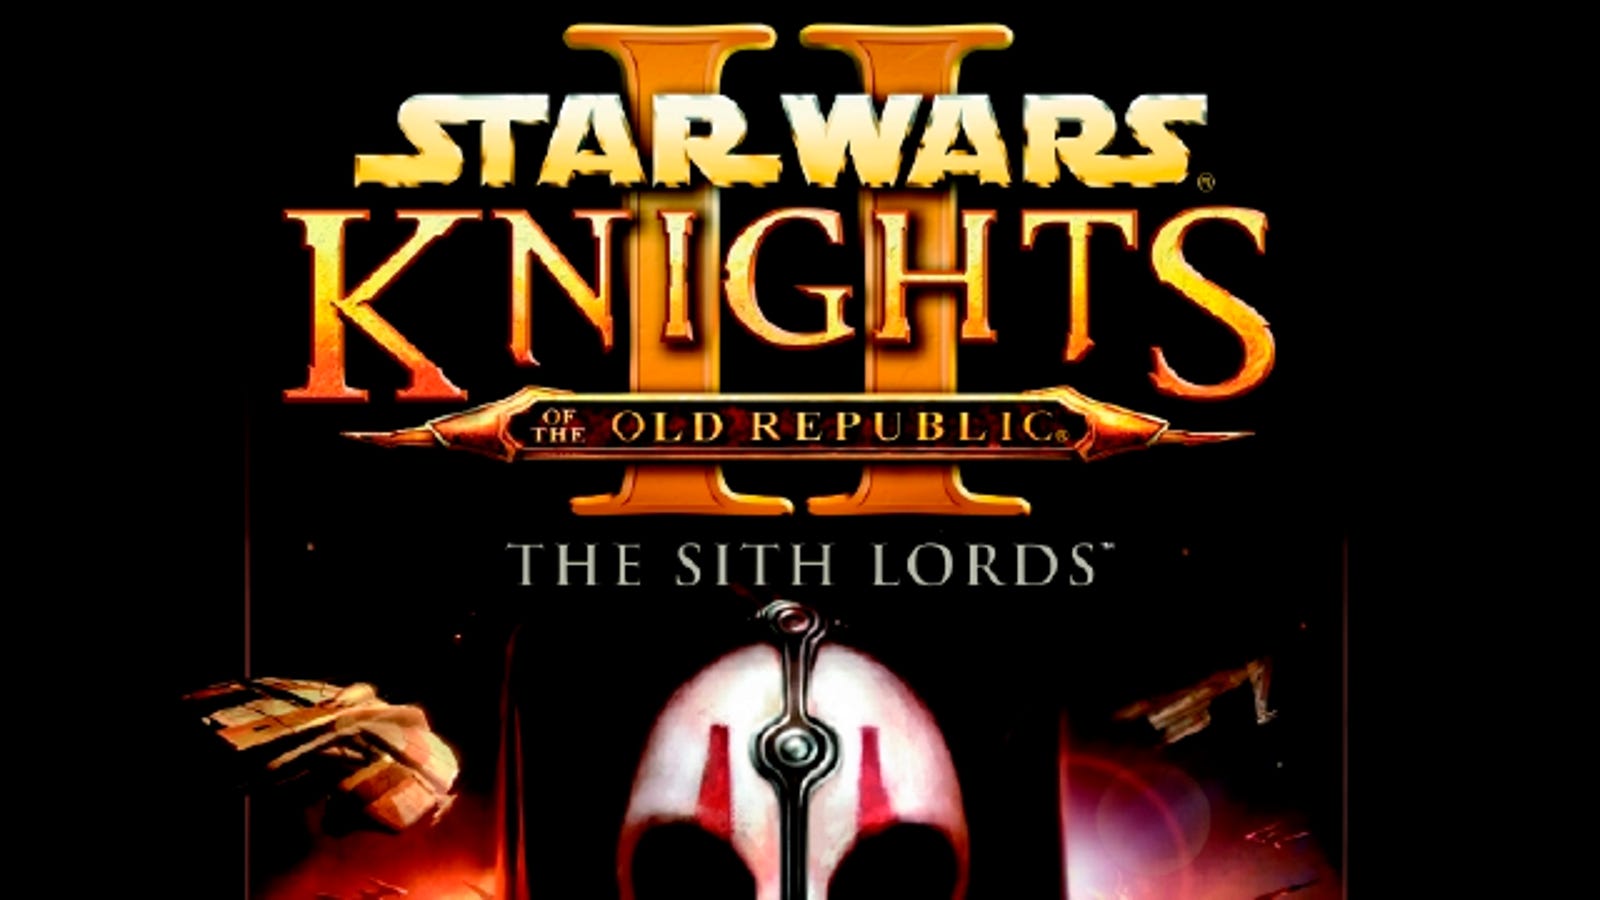 Star wars knights of the old republic 2 скачать торрент стим версия фото 91